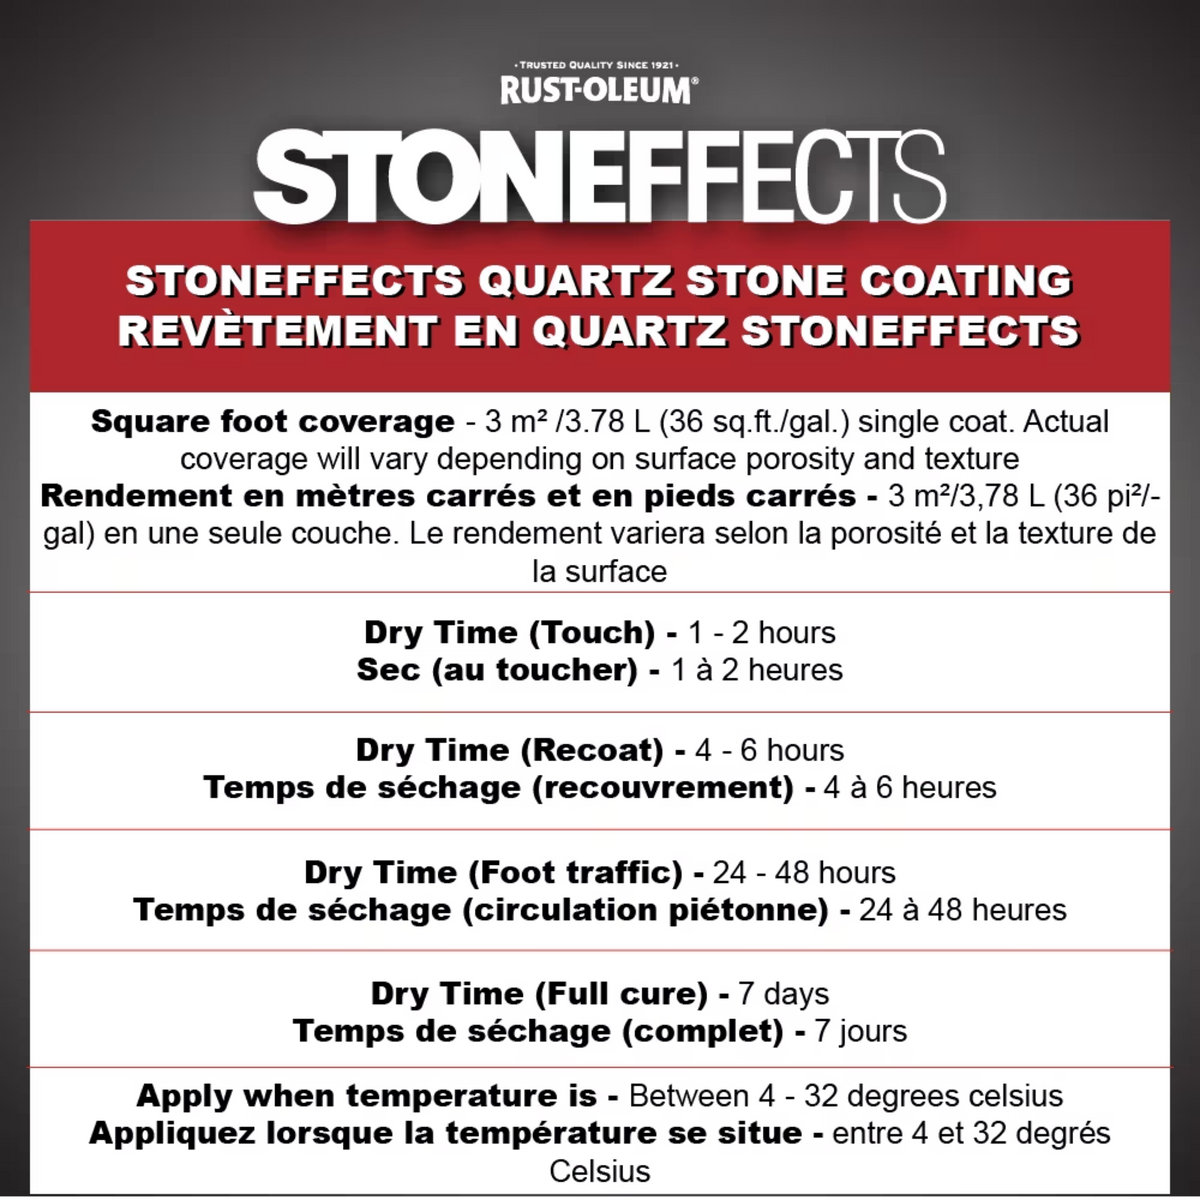 Stoneffects Quartz Stone Coating in 'Arizona Sands'